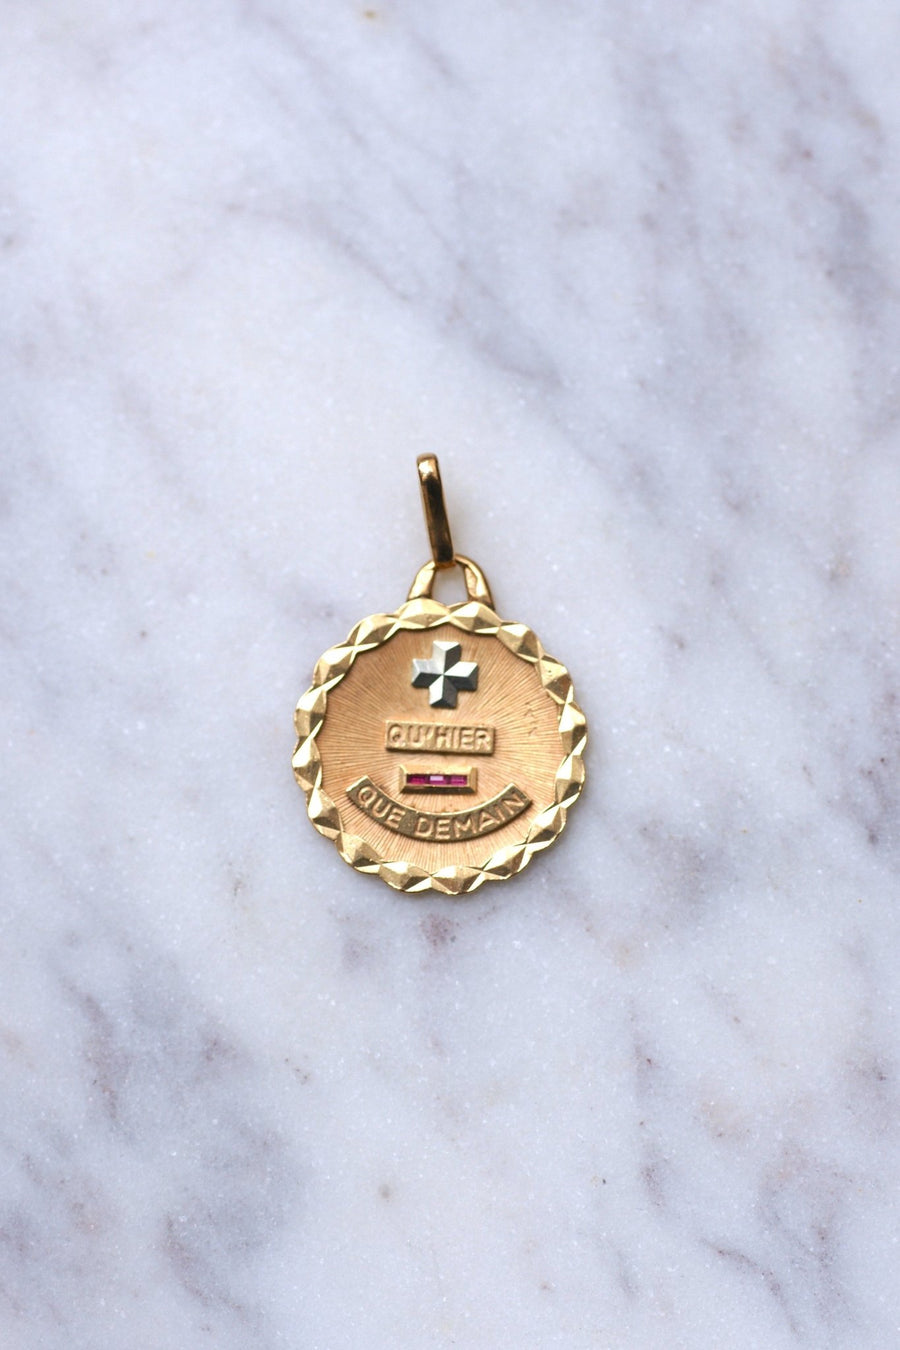 A.AUGIS love medal pendant in yellow gold - Galerie Pénélope